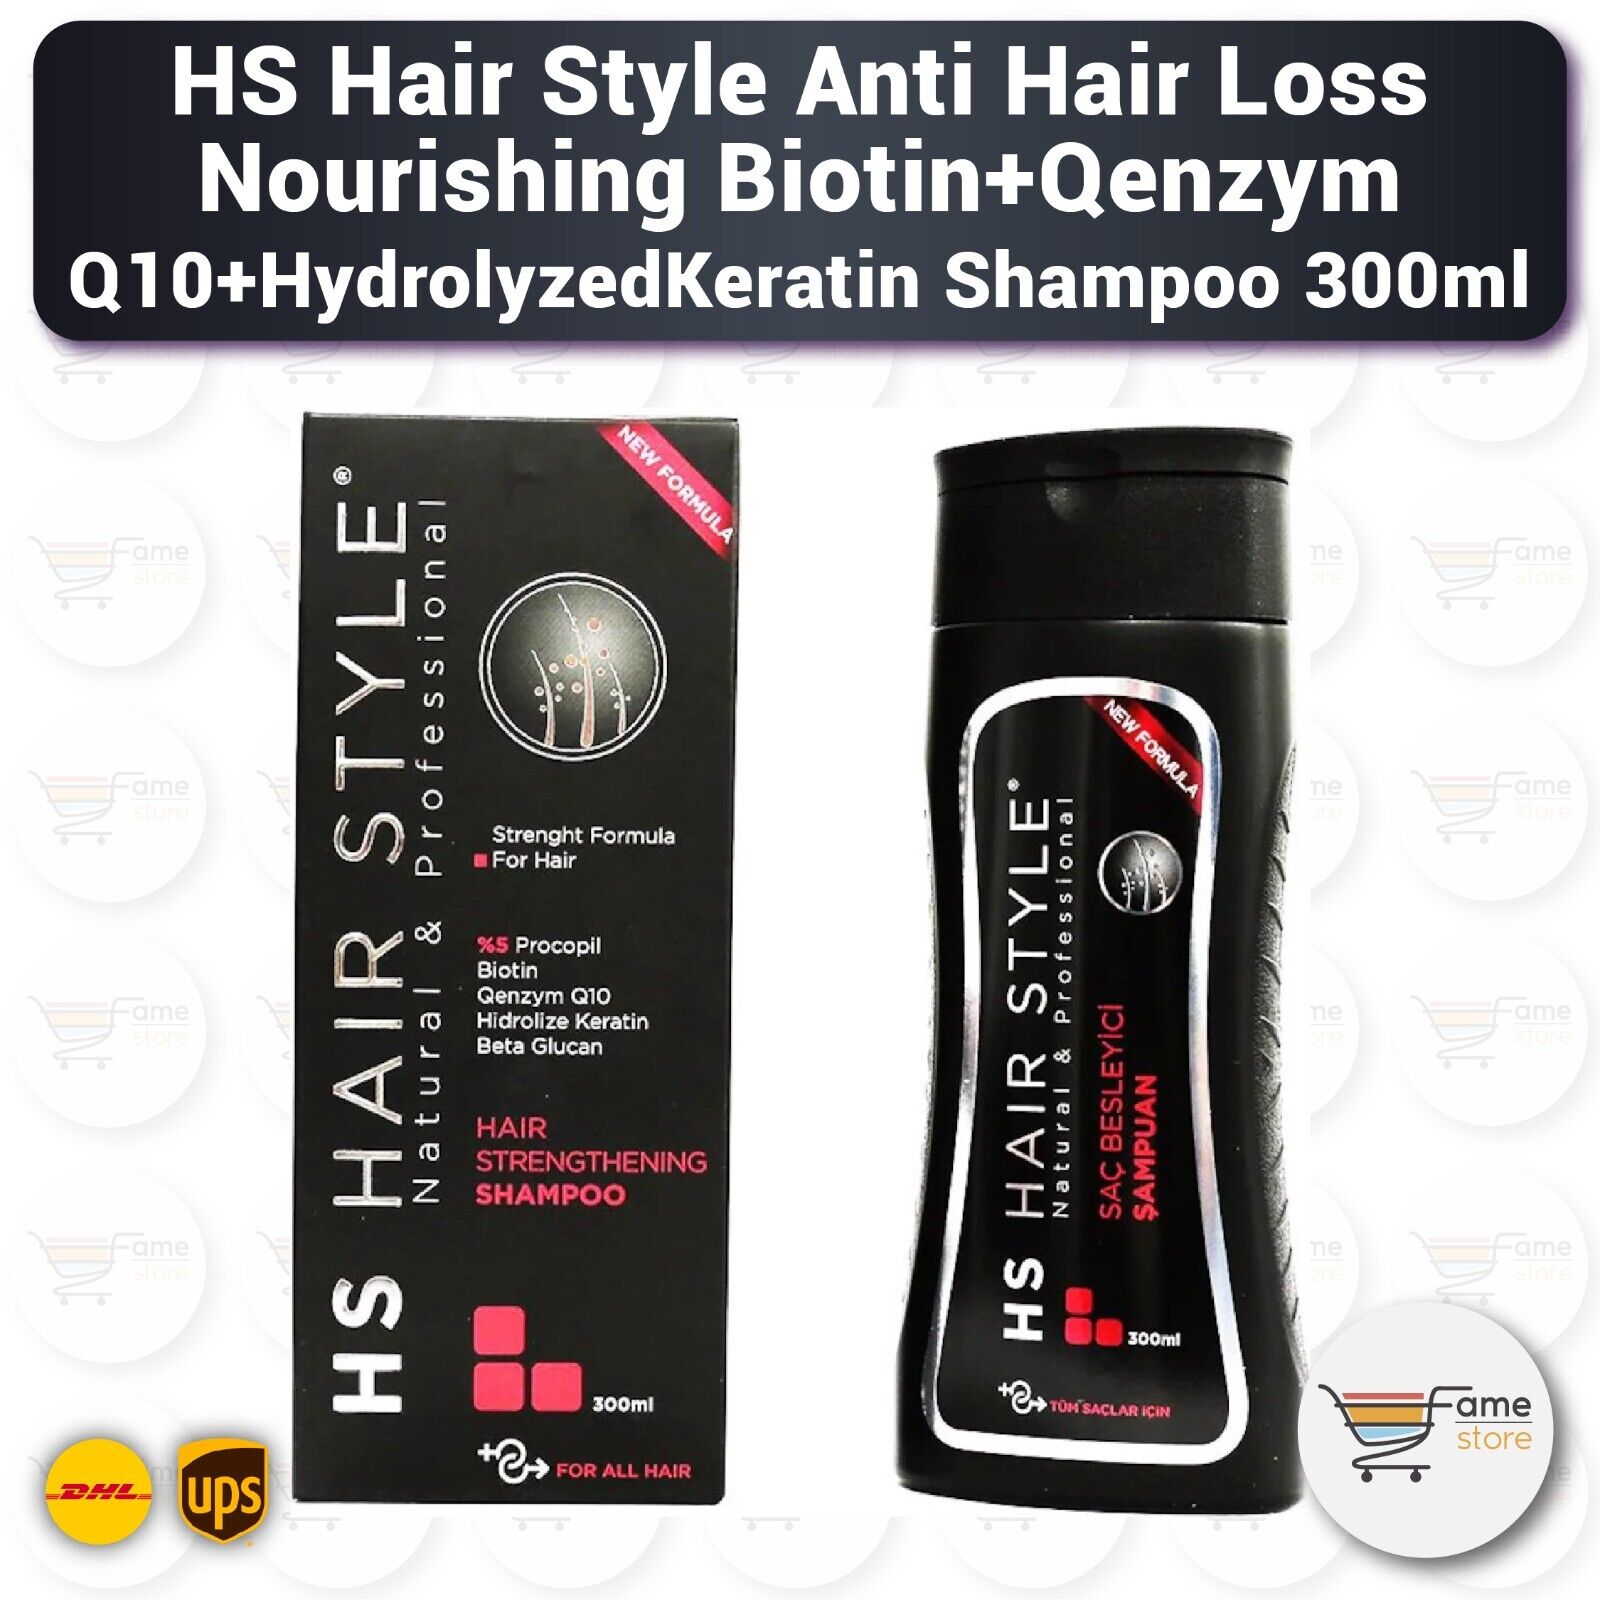 HS Hair Style Anti Hair Loss Nourishing Biotin+Qenzym Q10+Keratin Shampoo 300ml